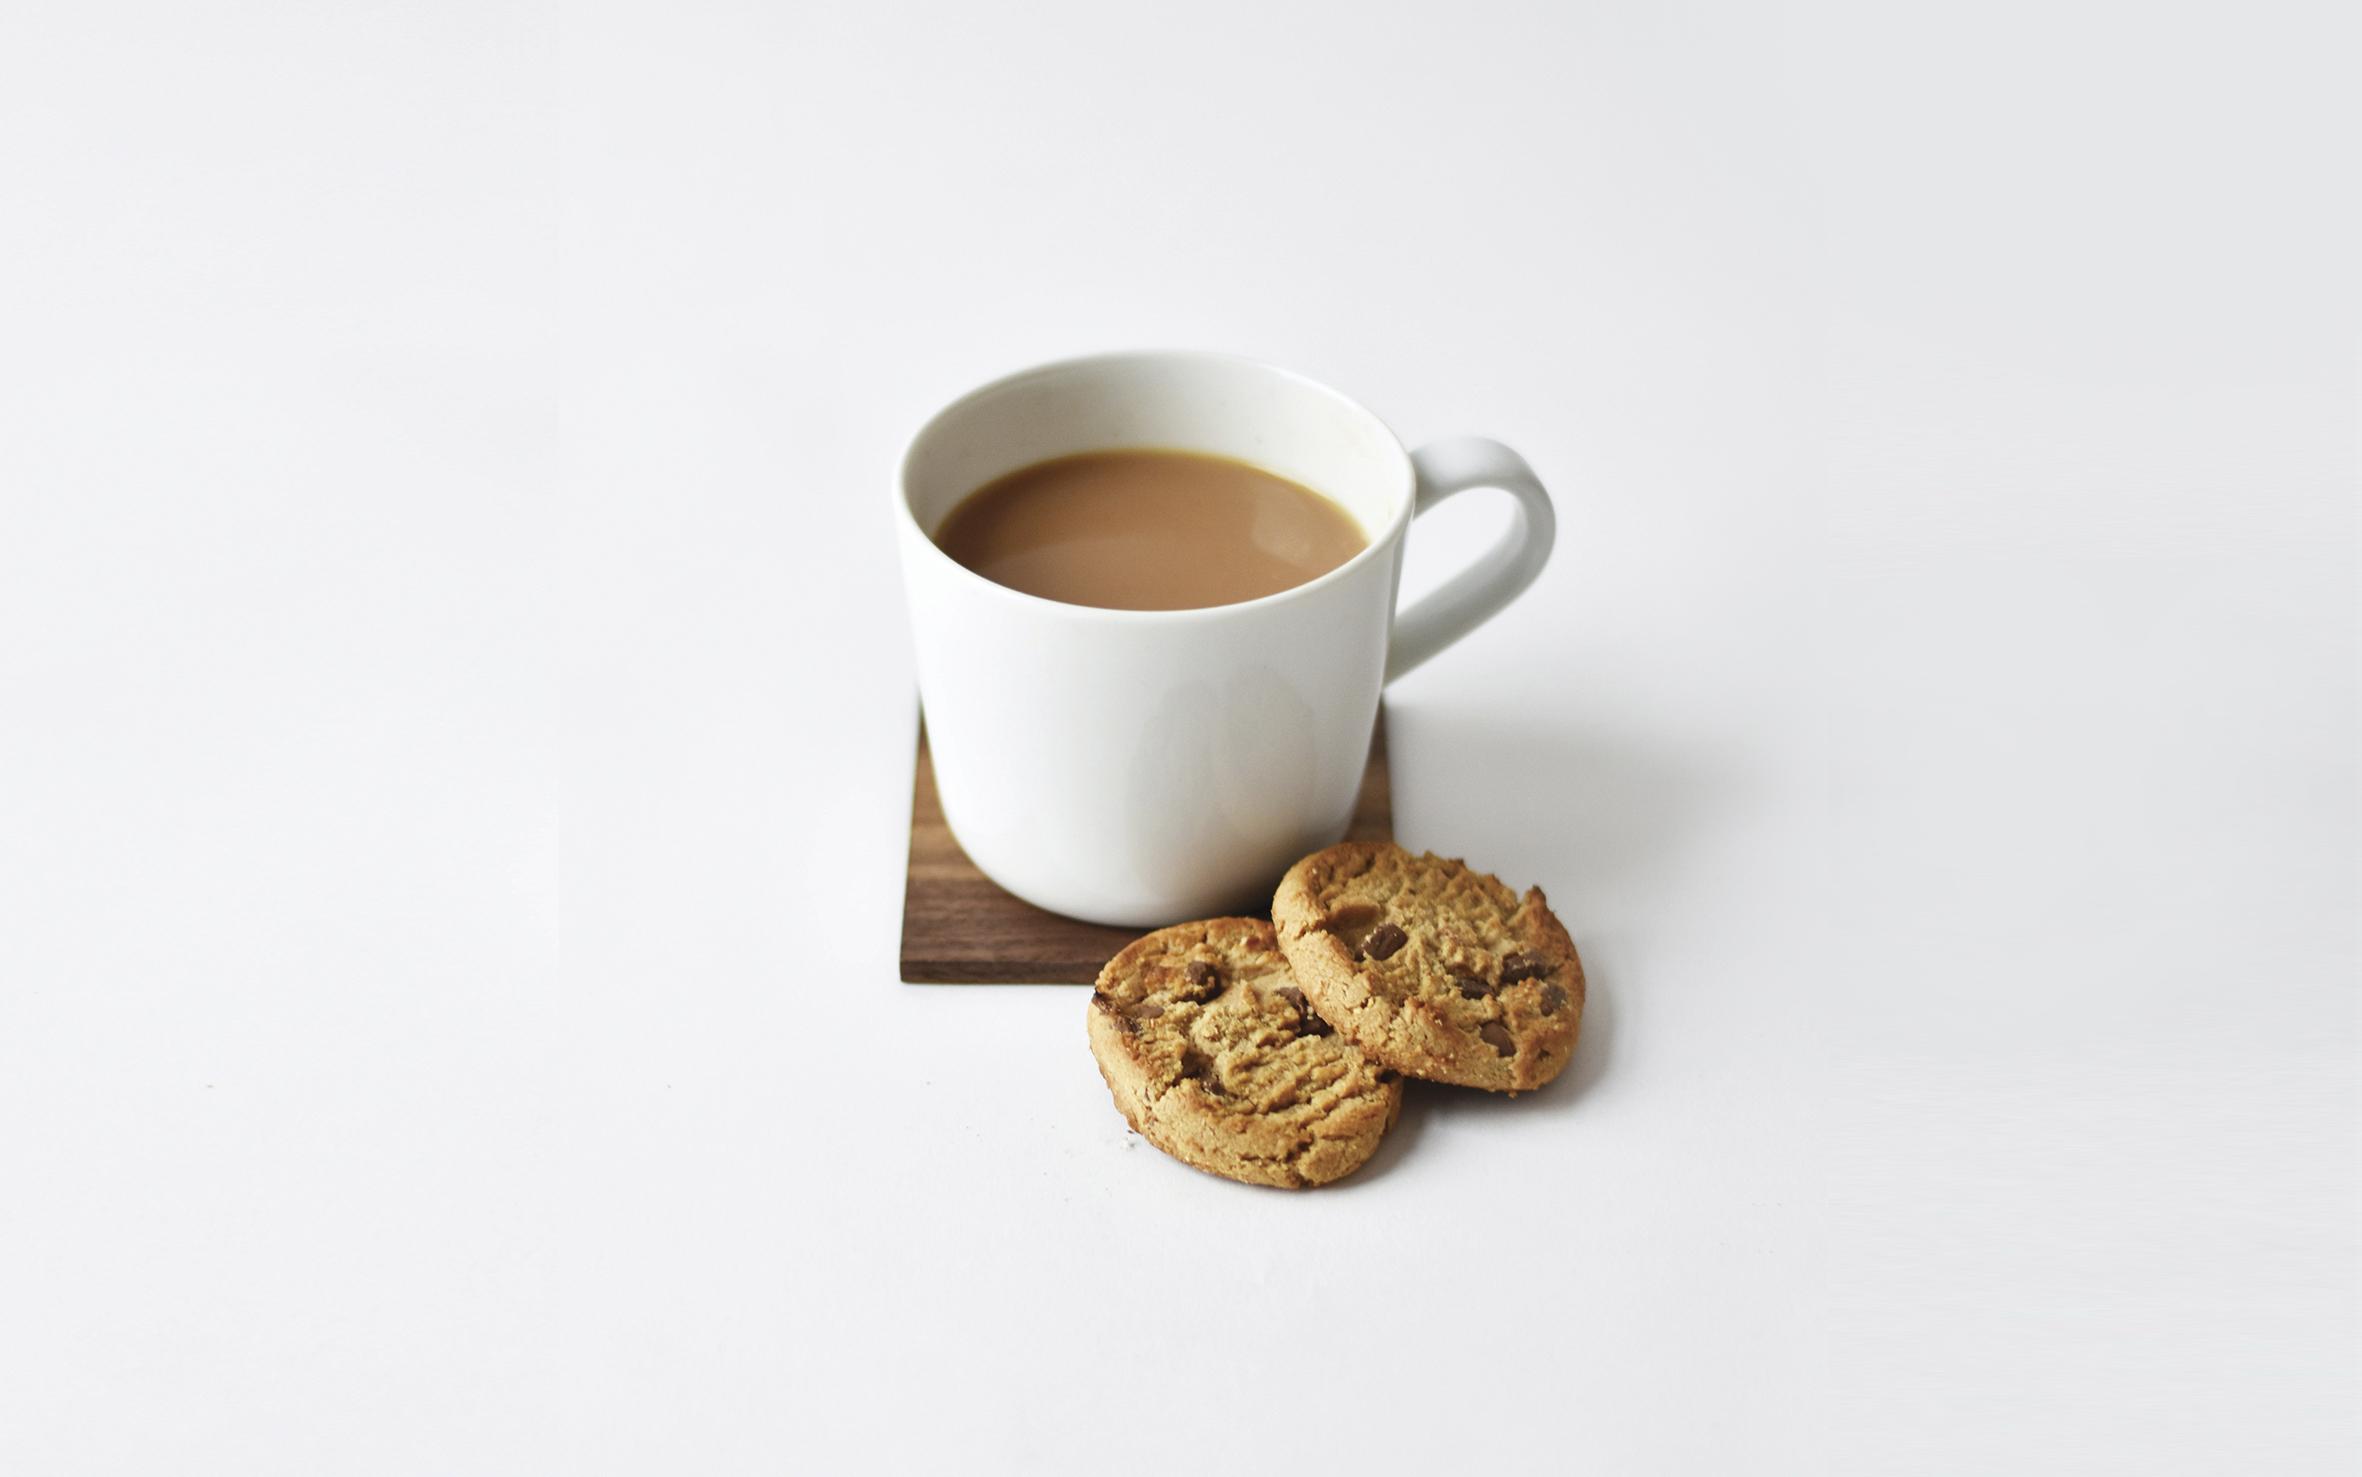 Tea and biscuits - Rumman Amin on Unsplash